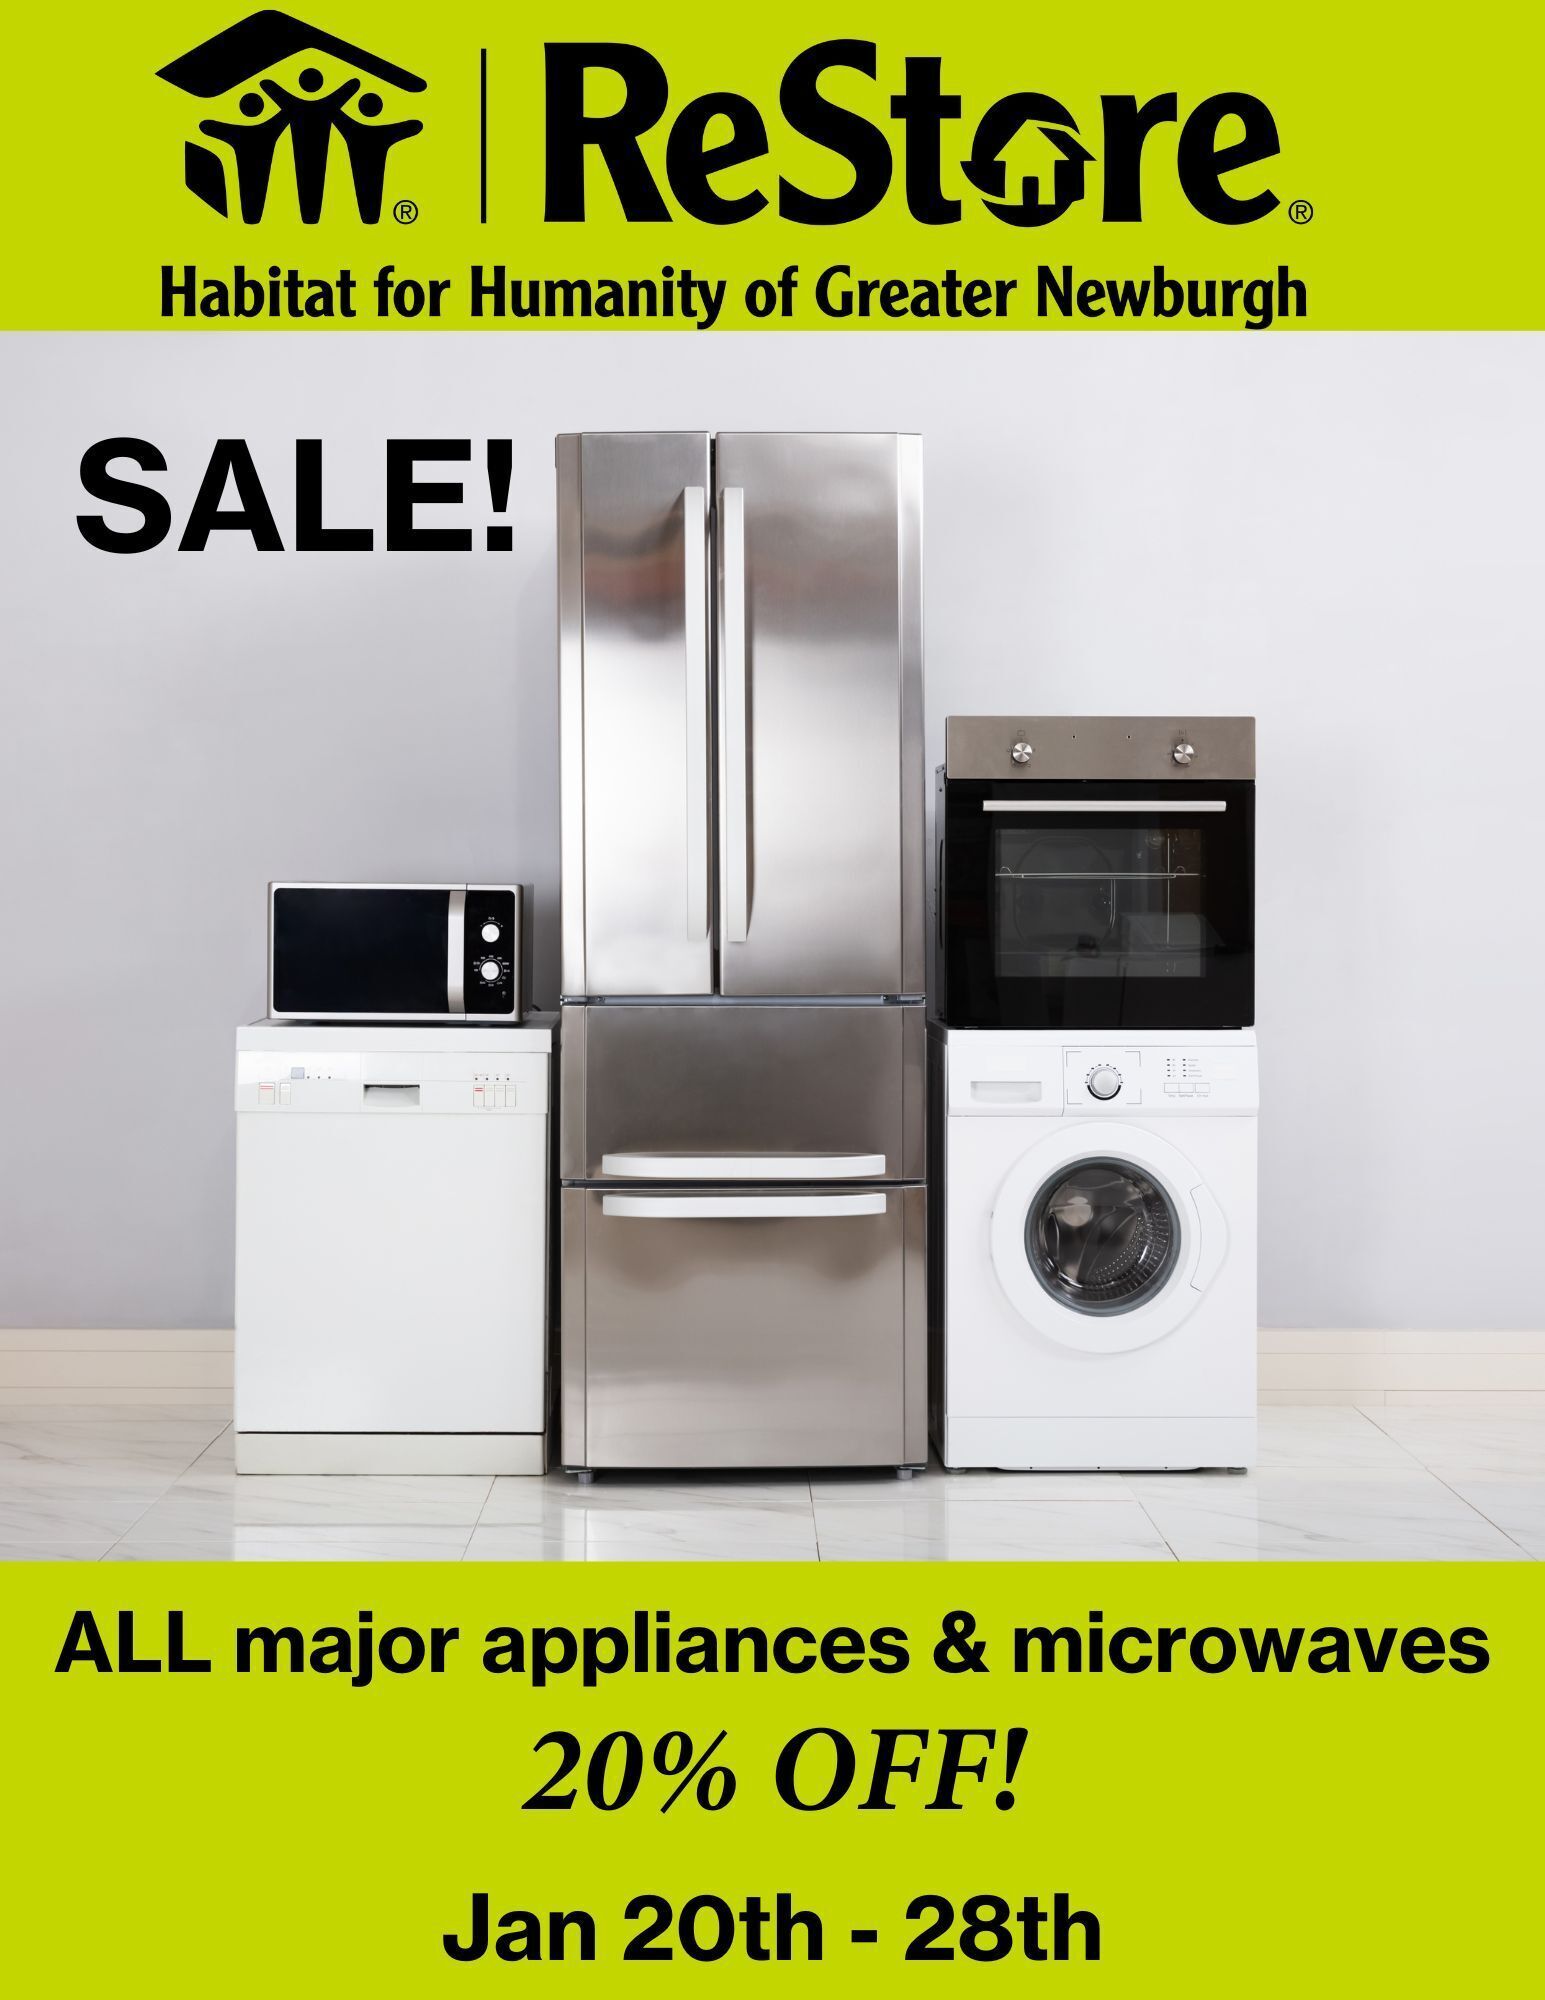 Jan 20th - 28th - ALL major appliances & microwaves 20% OFF at Habitat Newburgh ReStore!